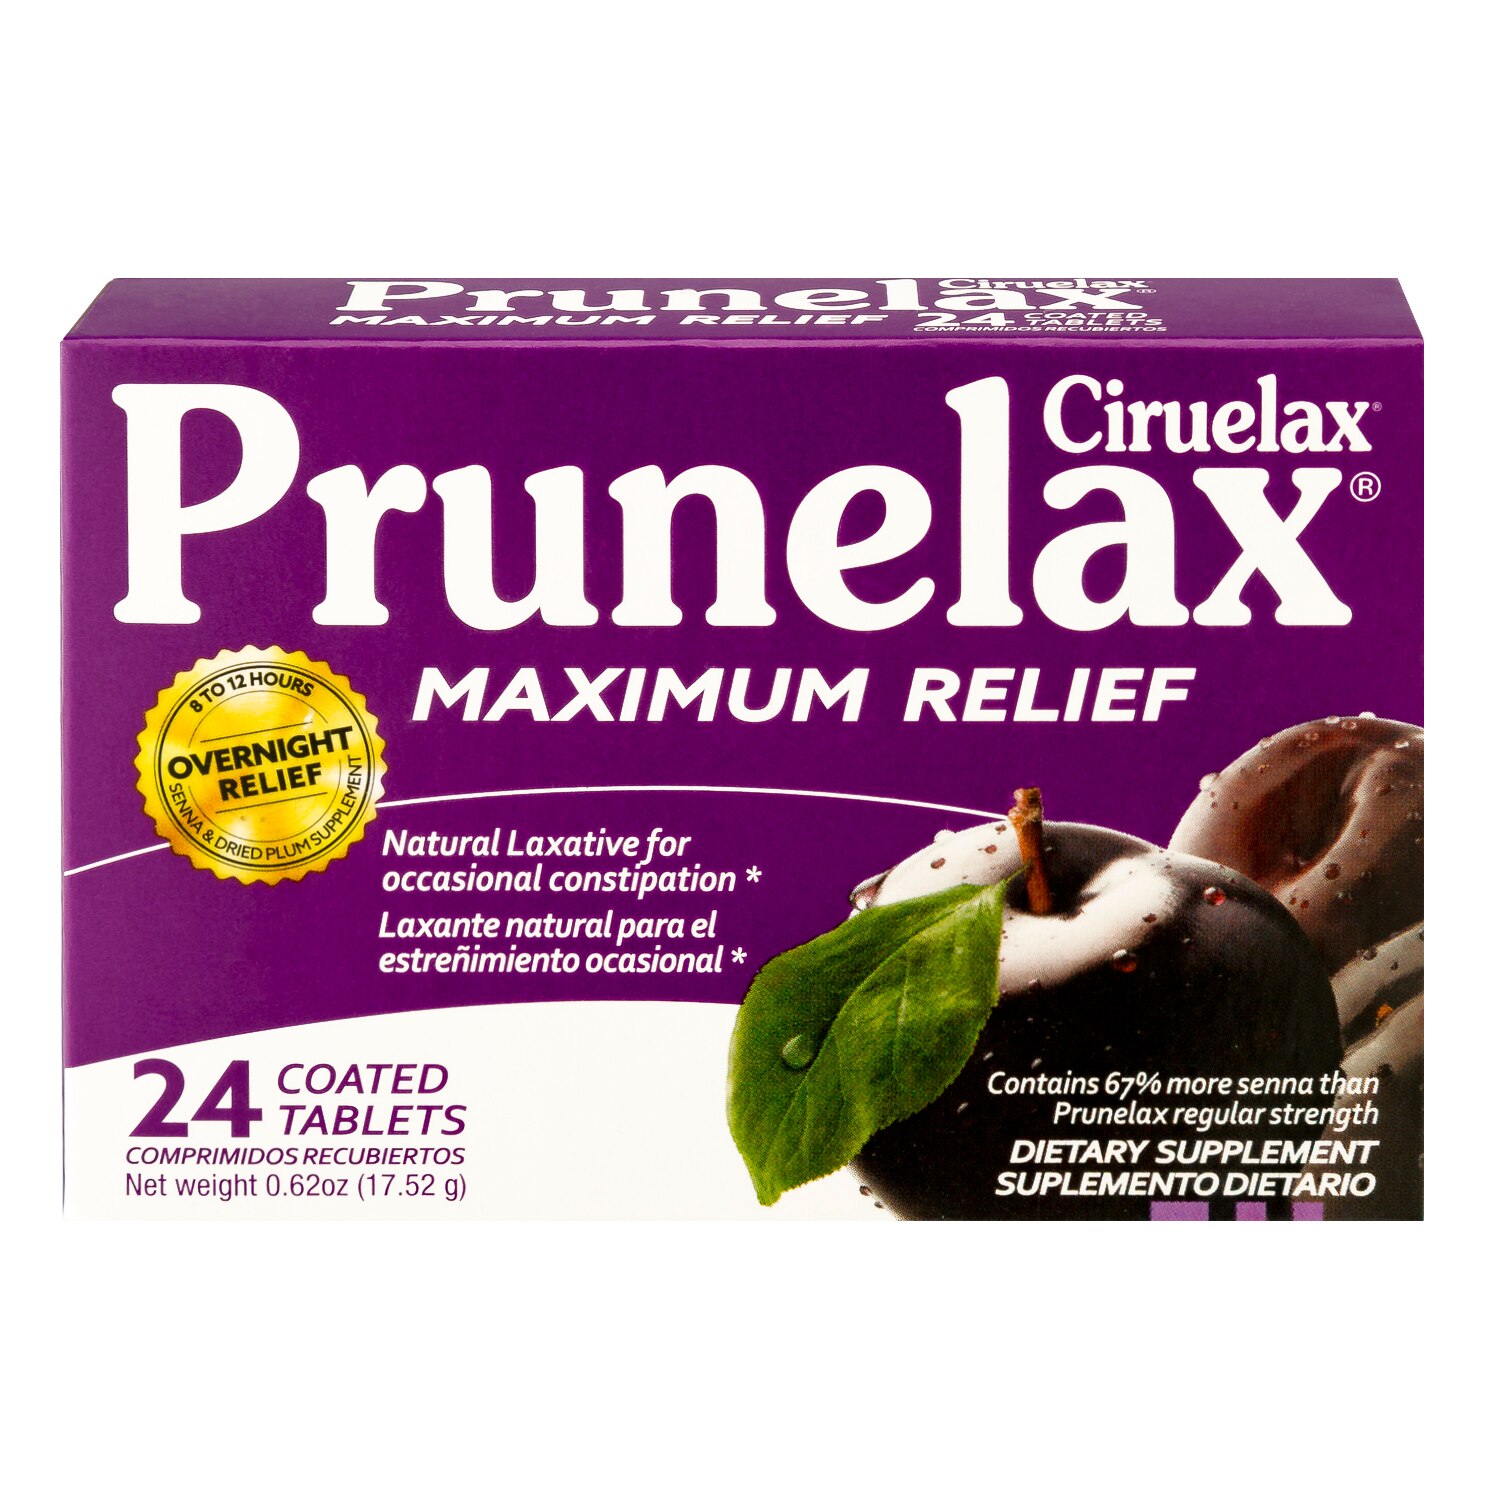 Prunelax Ciruelax Maximum Relief Coated Tablets